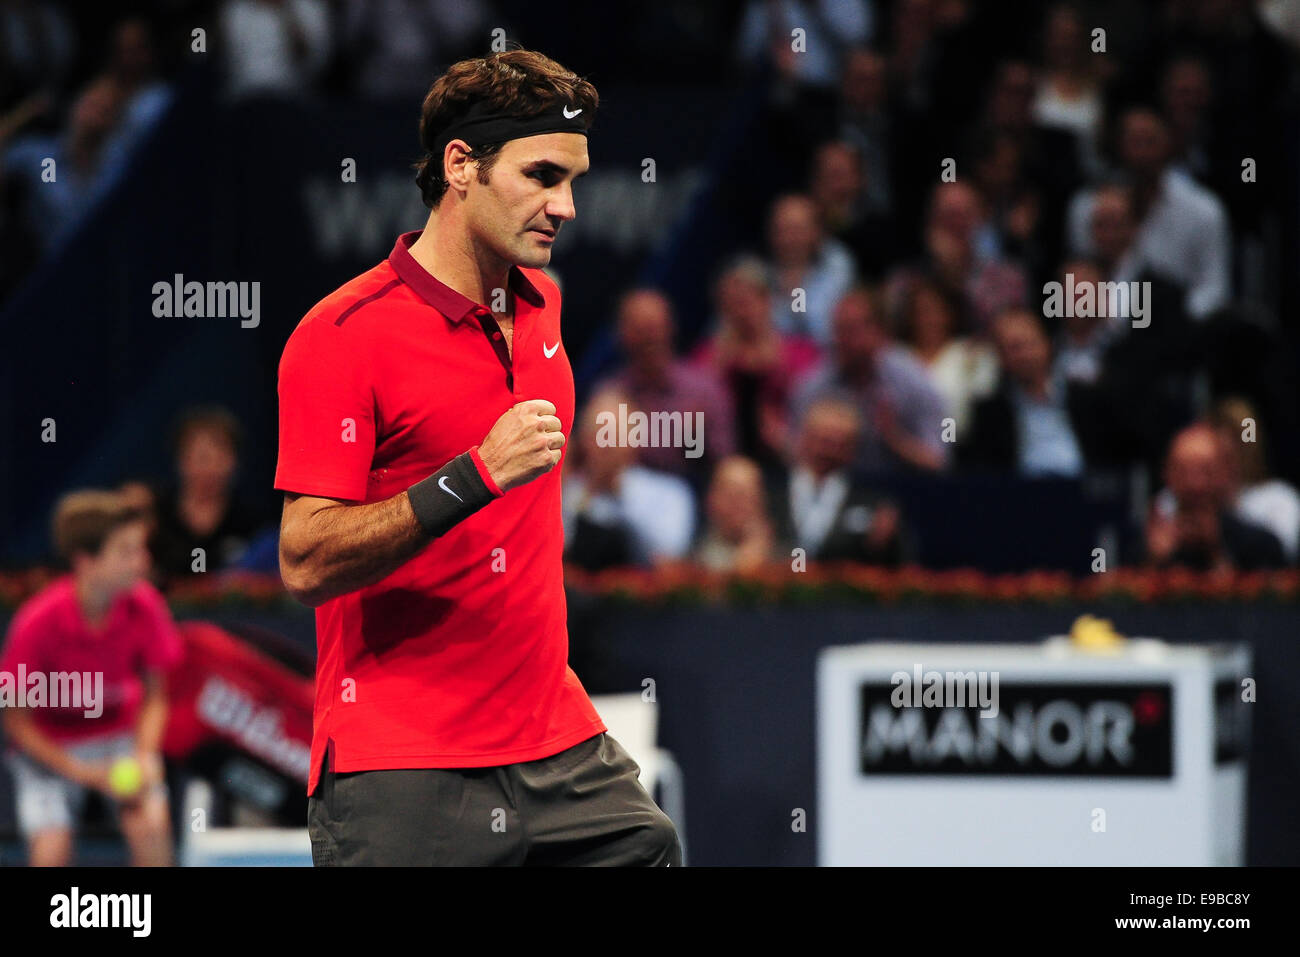 Basel, Svizzera. 23 ottobre, 2014. Roger Federer cheers durante la seconda prova del campionato svizzero interni a St. Jakobshalle. Foto: Miroslav Dakov/ Alamy Live News Foto Stock